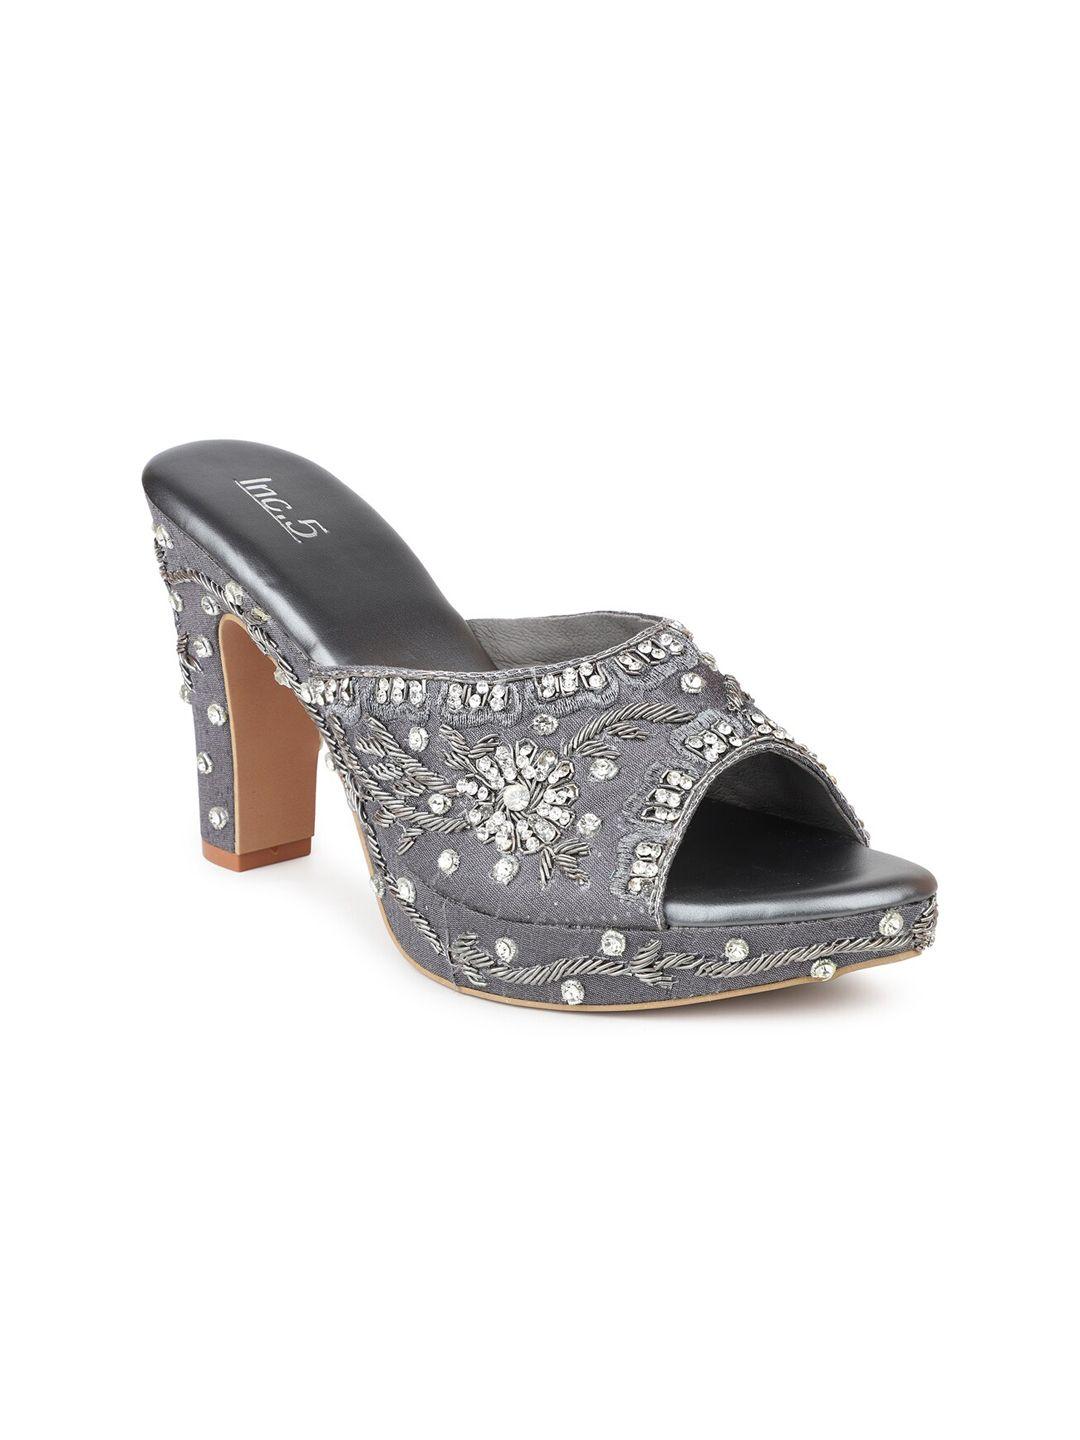 inc 5 women gunmetal-toned embellished peep toe party block heels